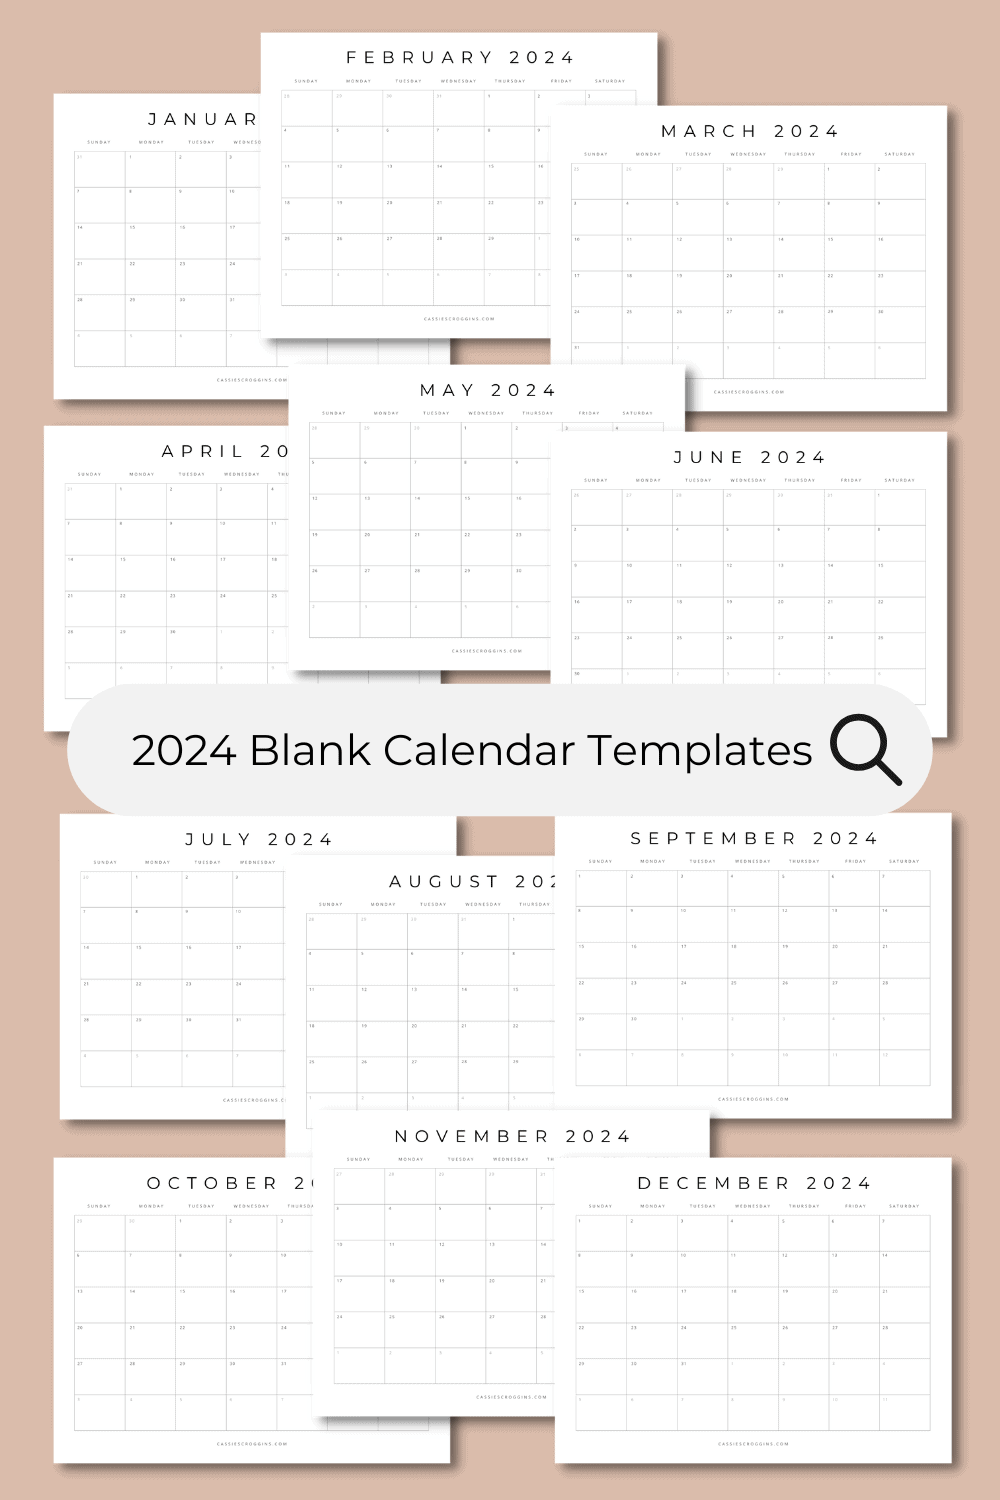 Free Printable 2024 Blank Calendar Templates (All 12 Months) for Free Printable Budget Calendar 2024